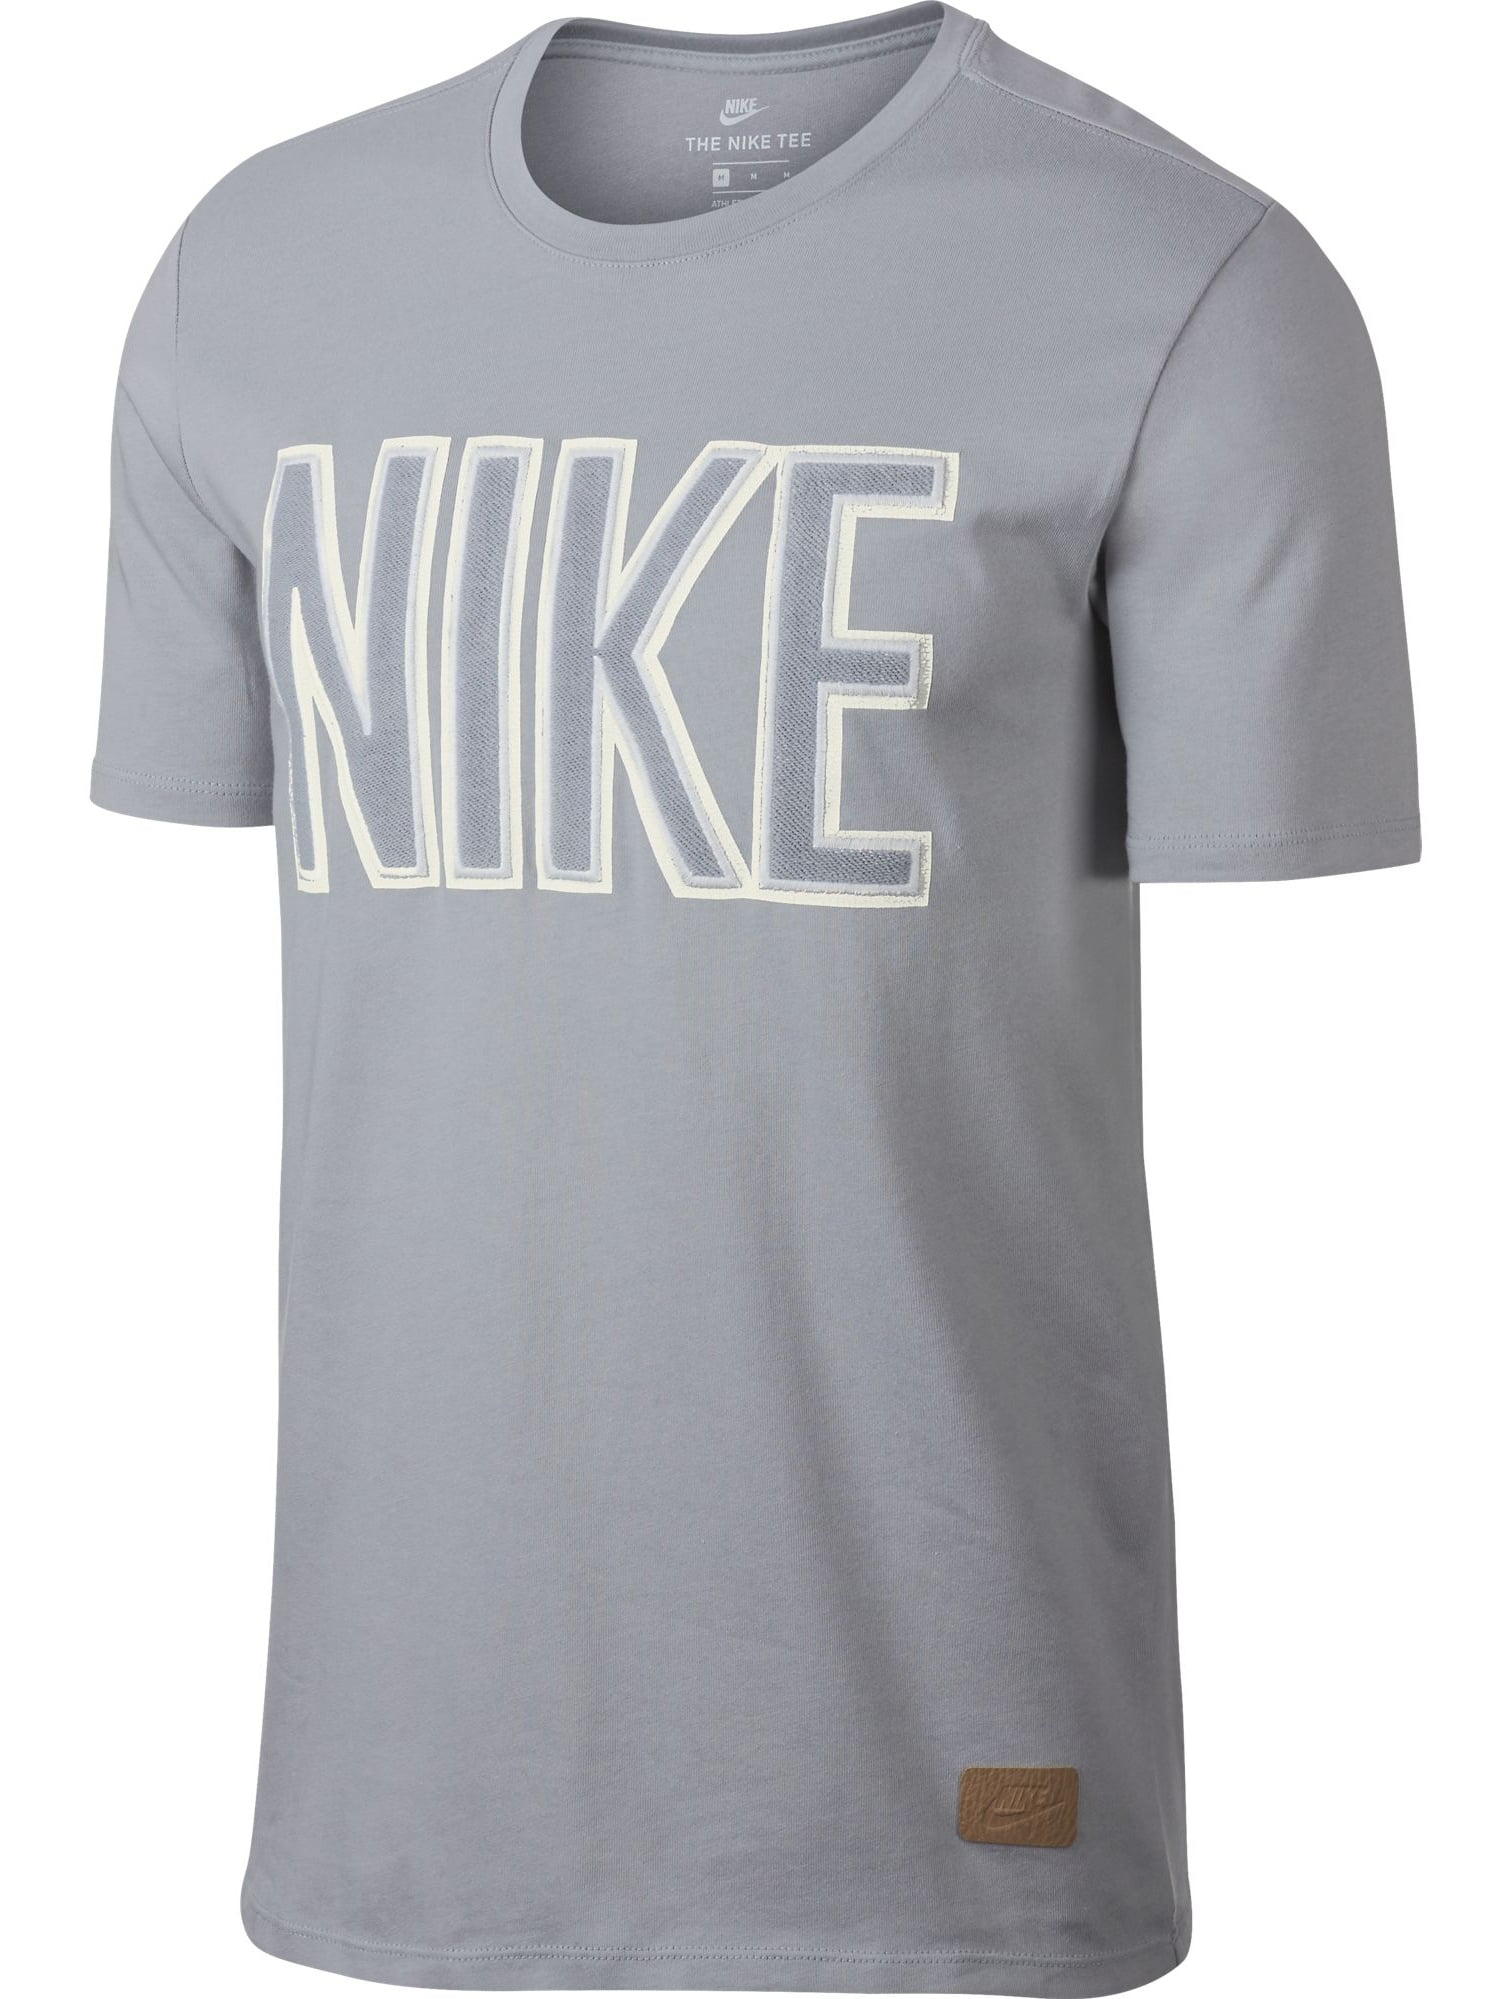 Nike - Nike S+7 Men's Shortsleeve Sportswear Fashion T-Shirt Cool Grey 906968-012 - Walmart.com ...